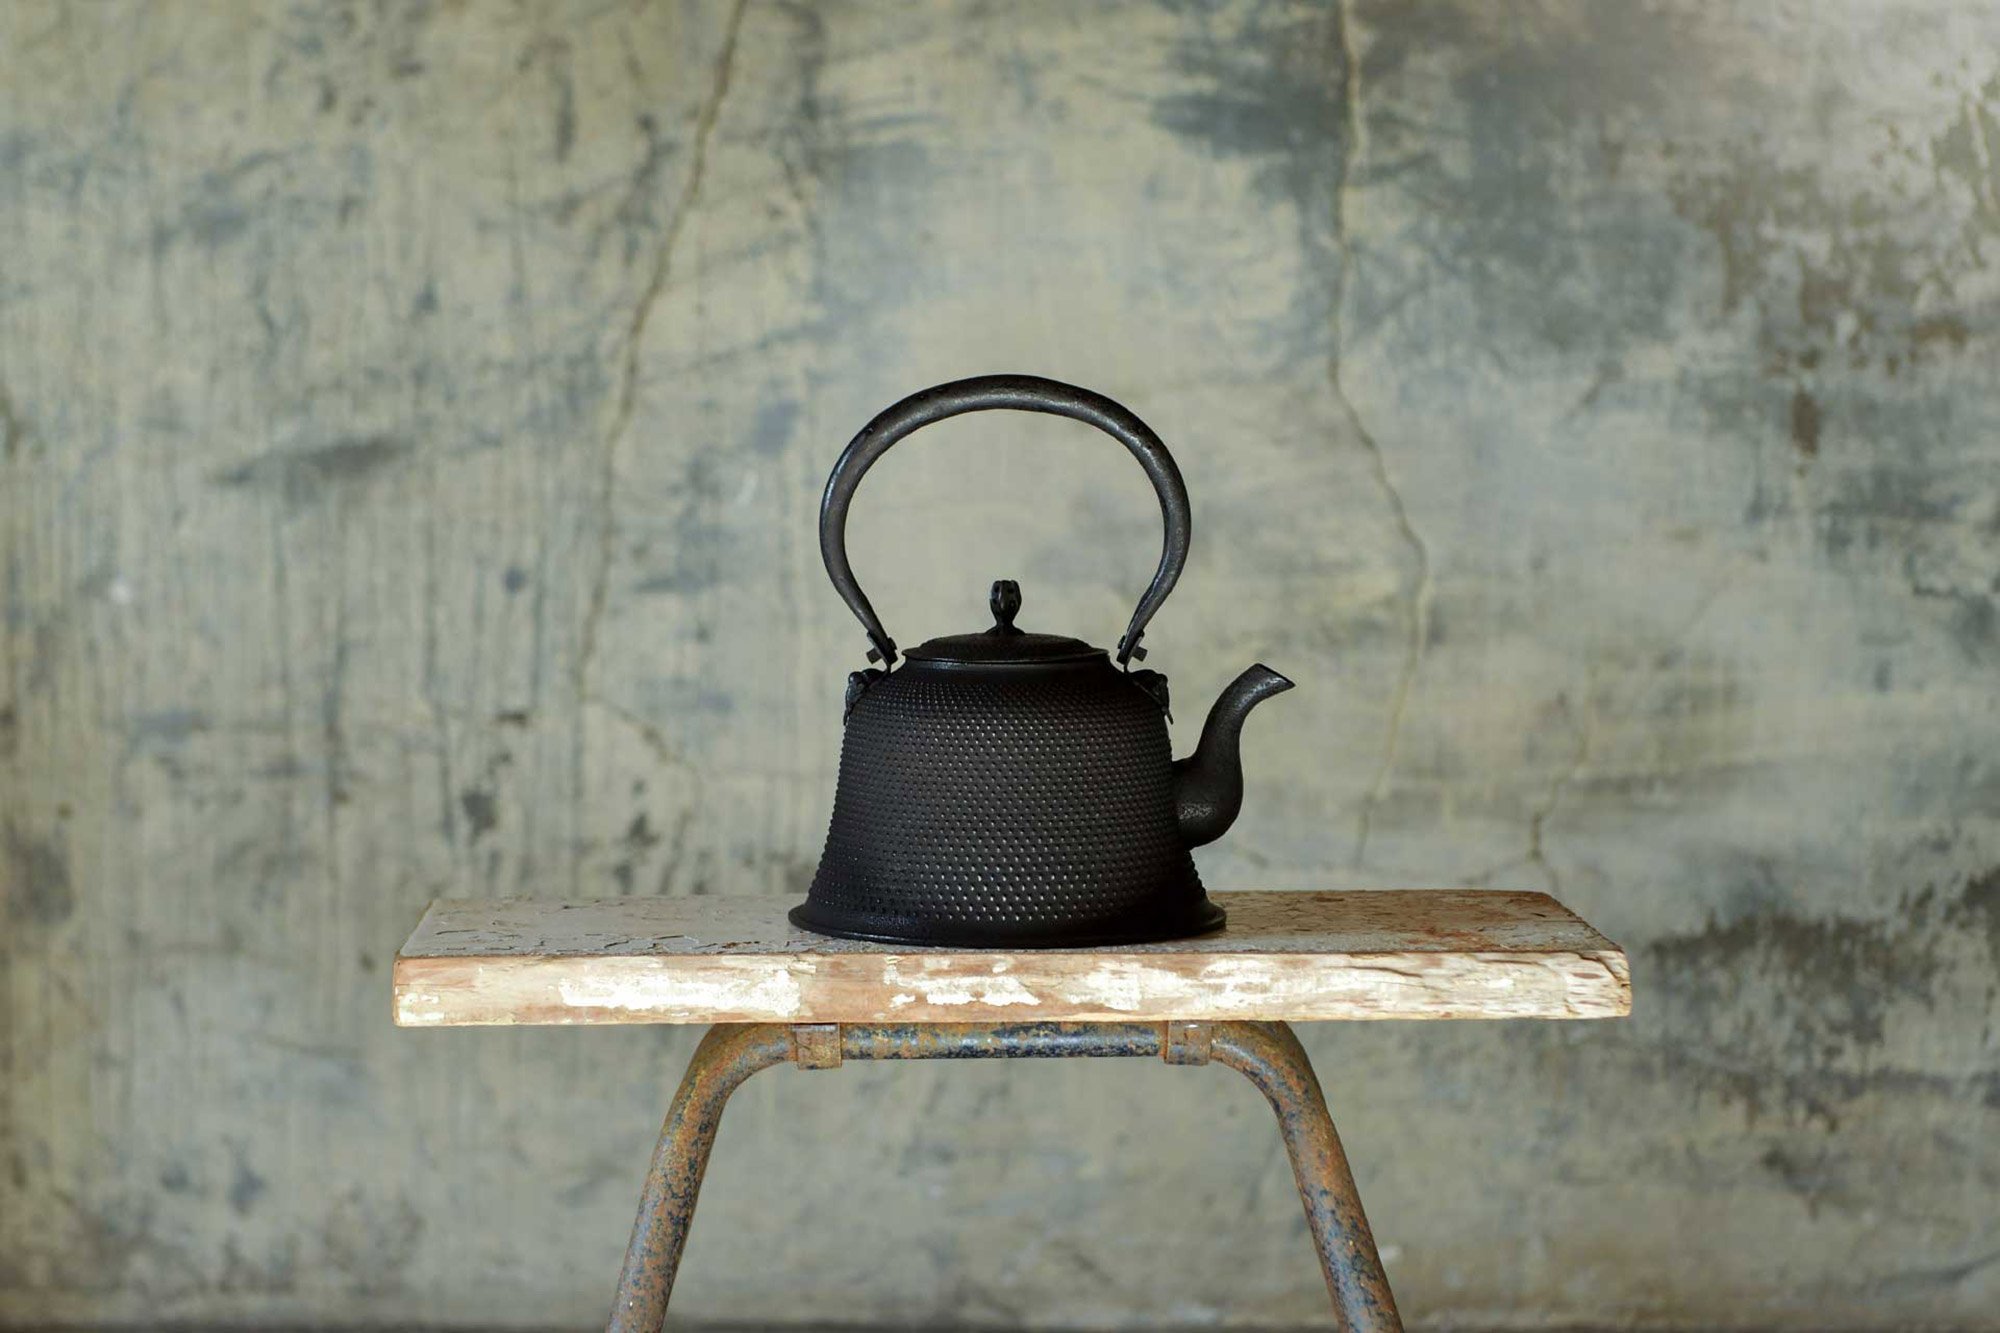 Black Cast Iron Tea Kettle Set for 2 - Contemporary Dutch Hobnail Design with Trivet, Two Cups - 1200 ml